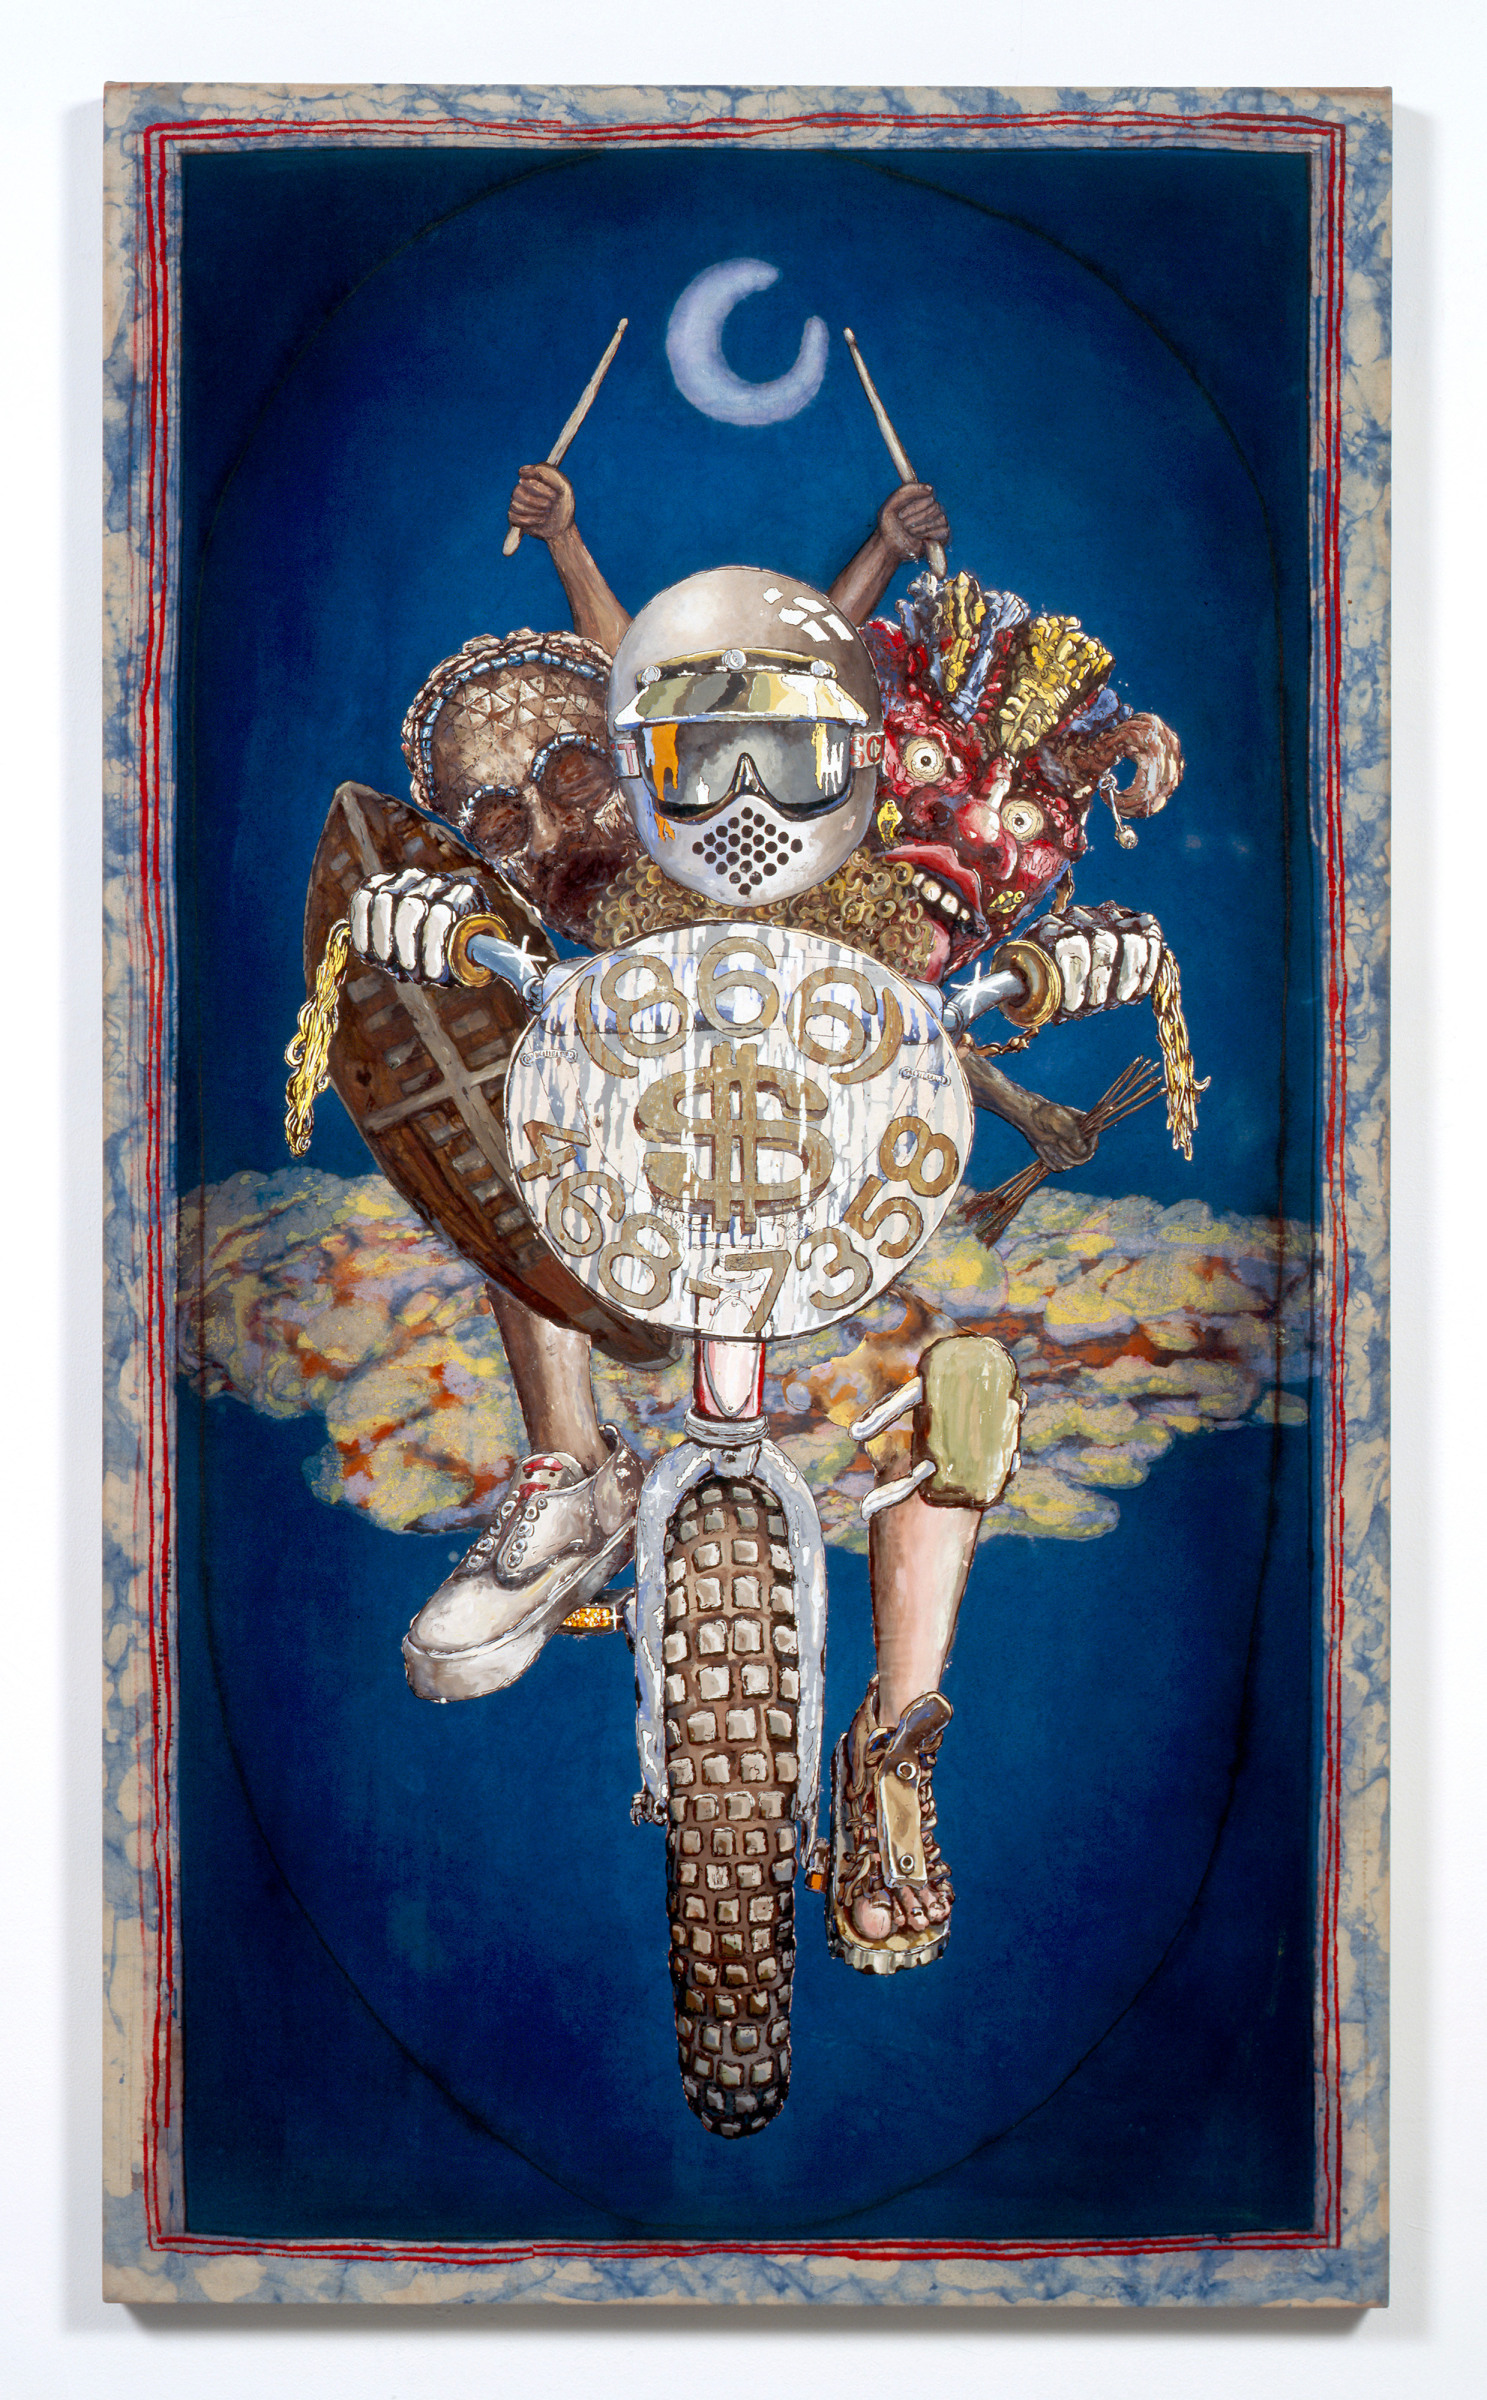 Ivan Morley
Tehachepi, (sic), 2005
oil, acrylic, batik, thread, and UV varnish on canvas
65 x 37 1/2 inches
(165.1 x 95.3 cm)
Photo by Joshua White